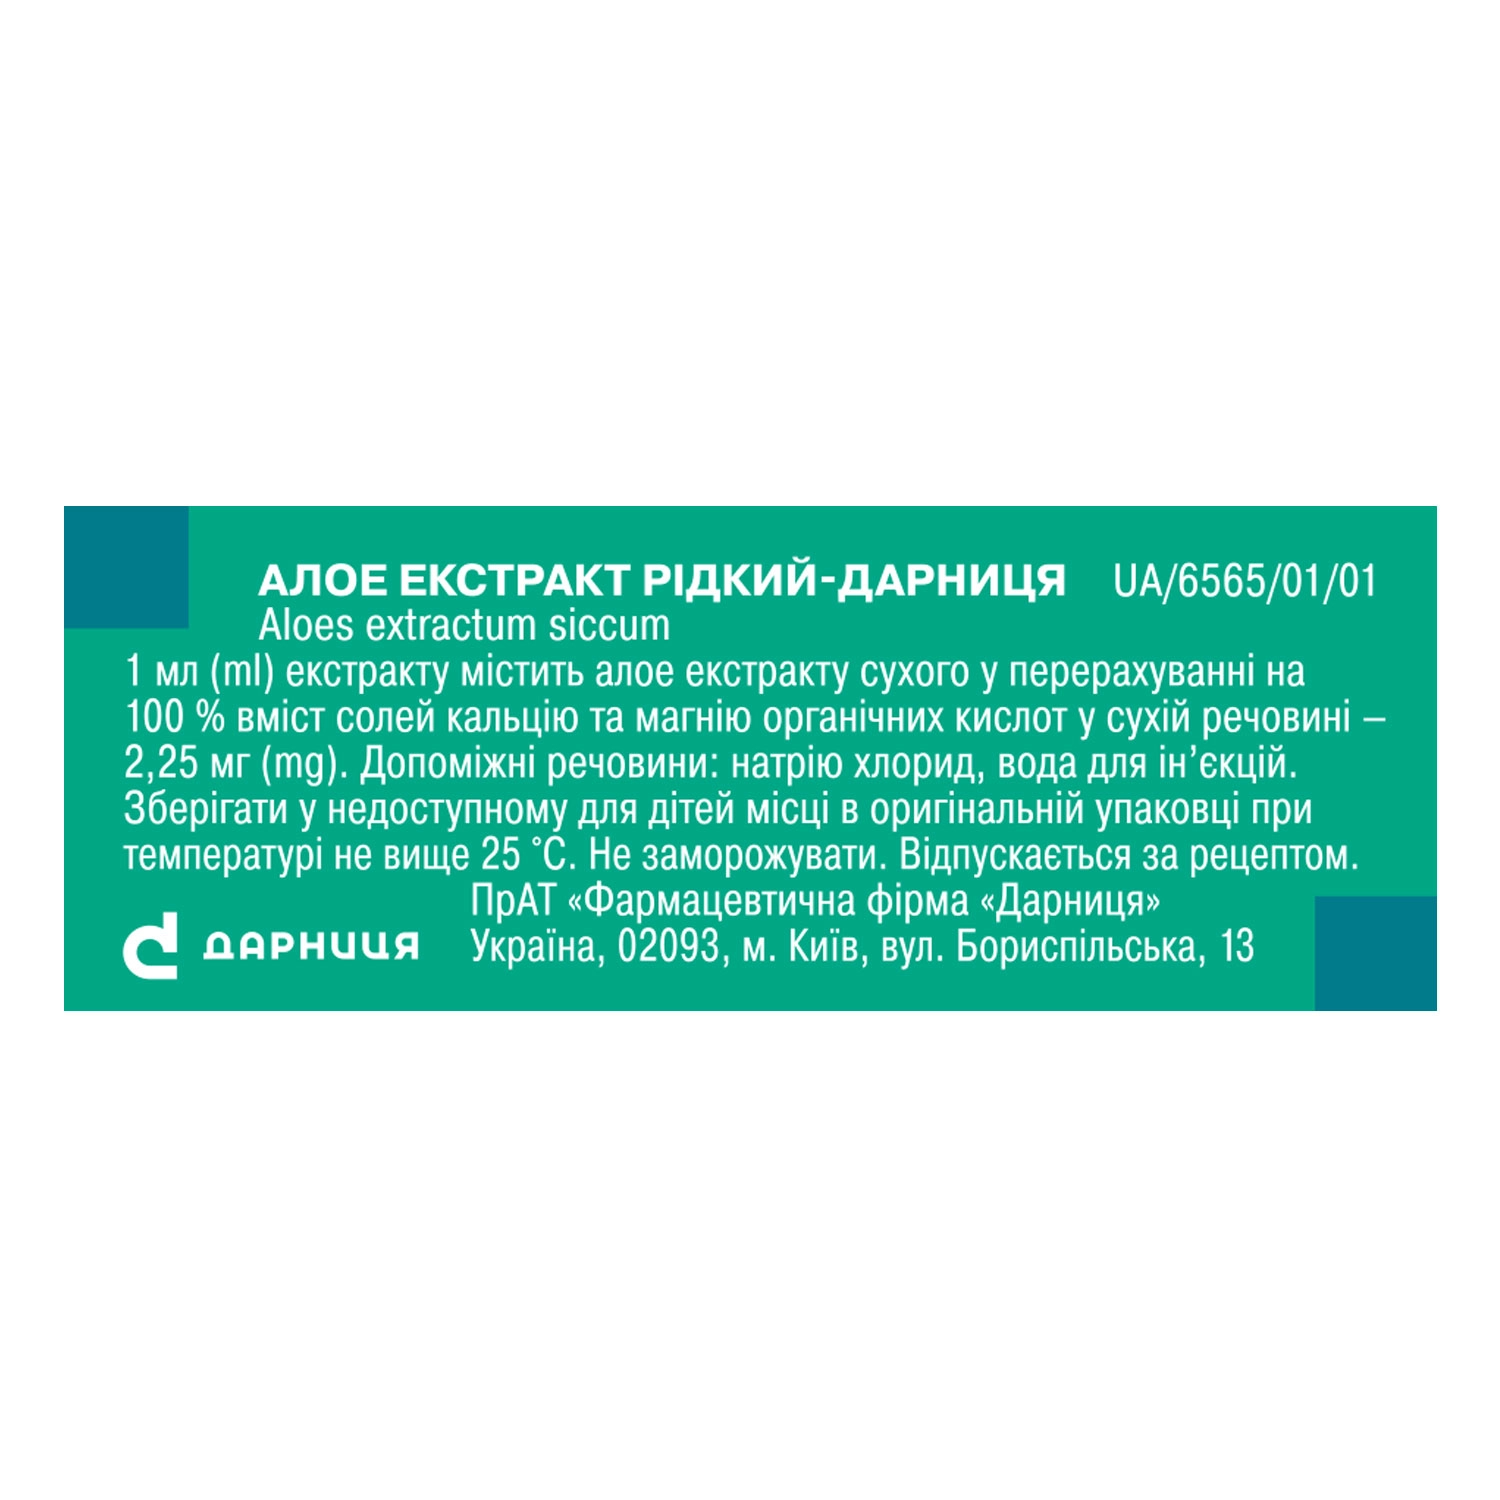 Aloe extract liquid-Darnitsa manufacturer "Darnytsia" pharmaceutical company